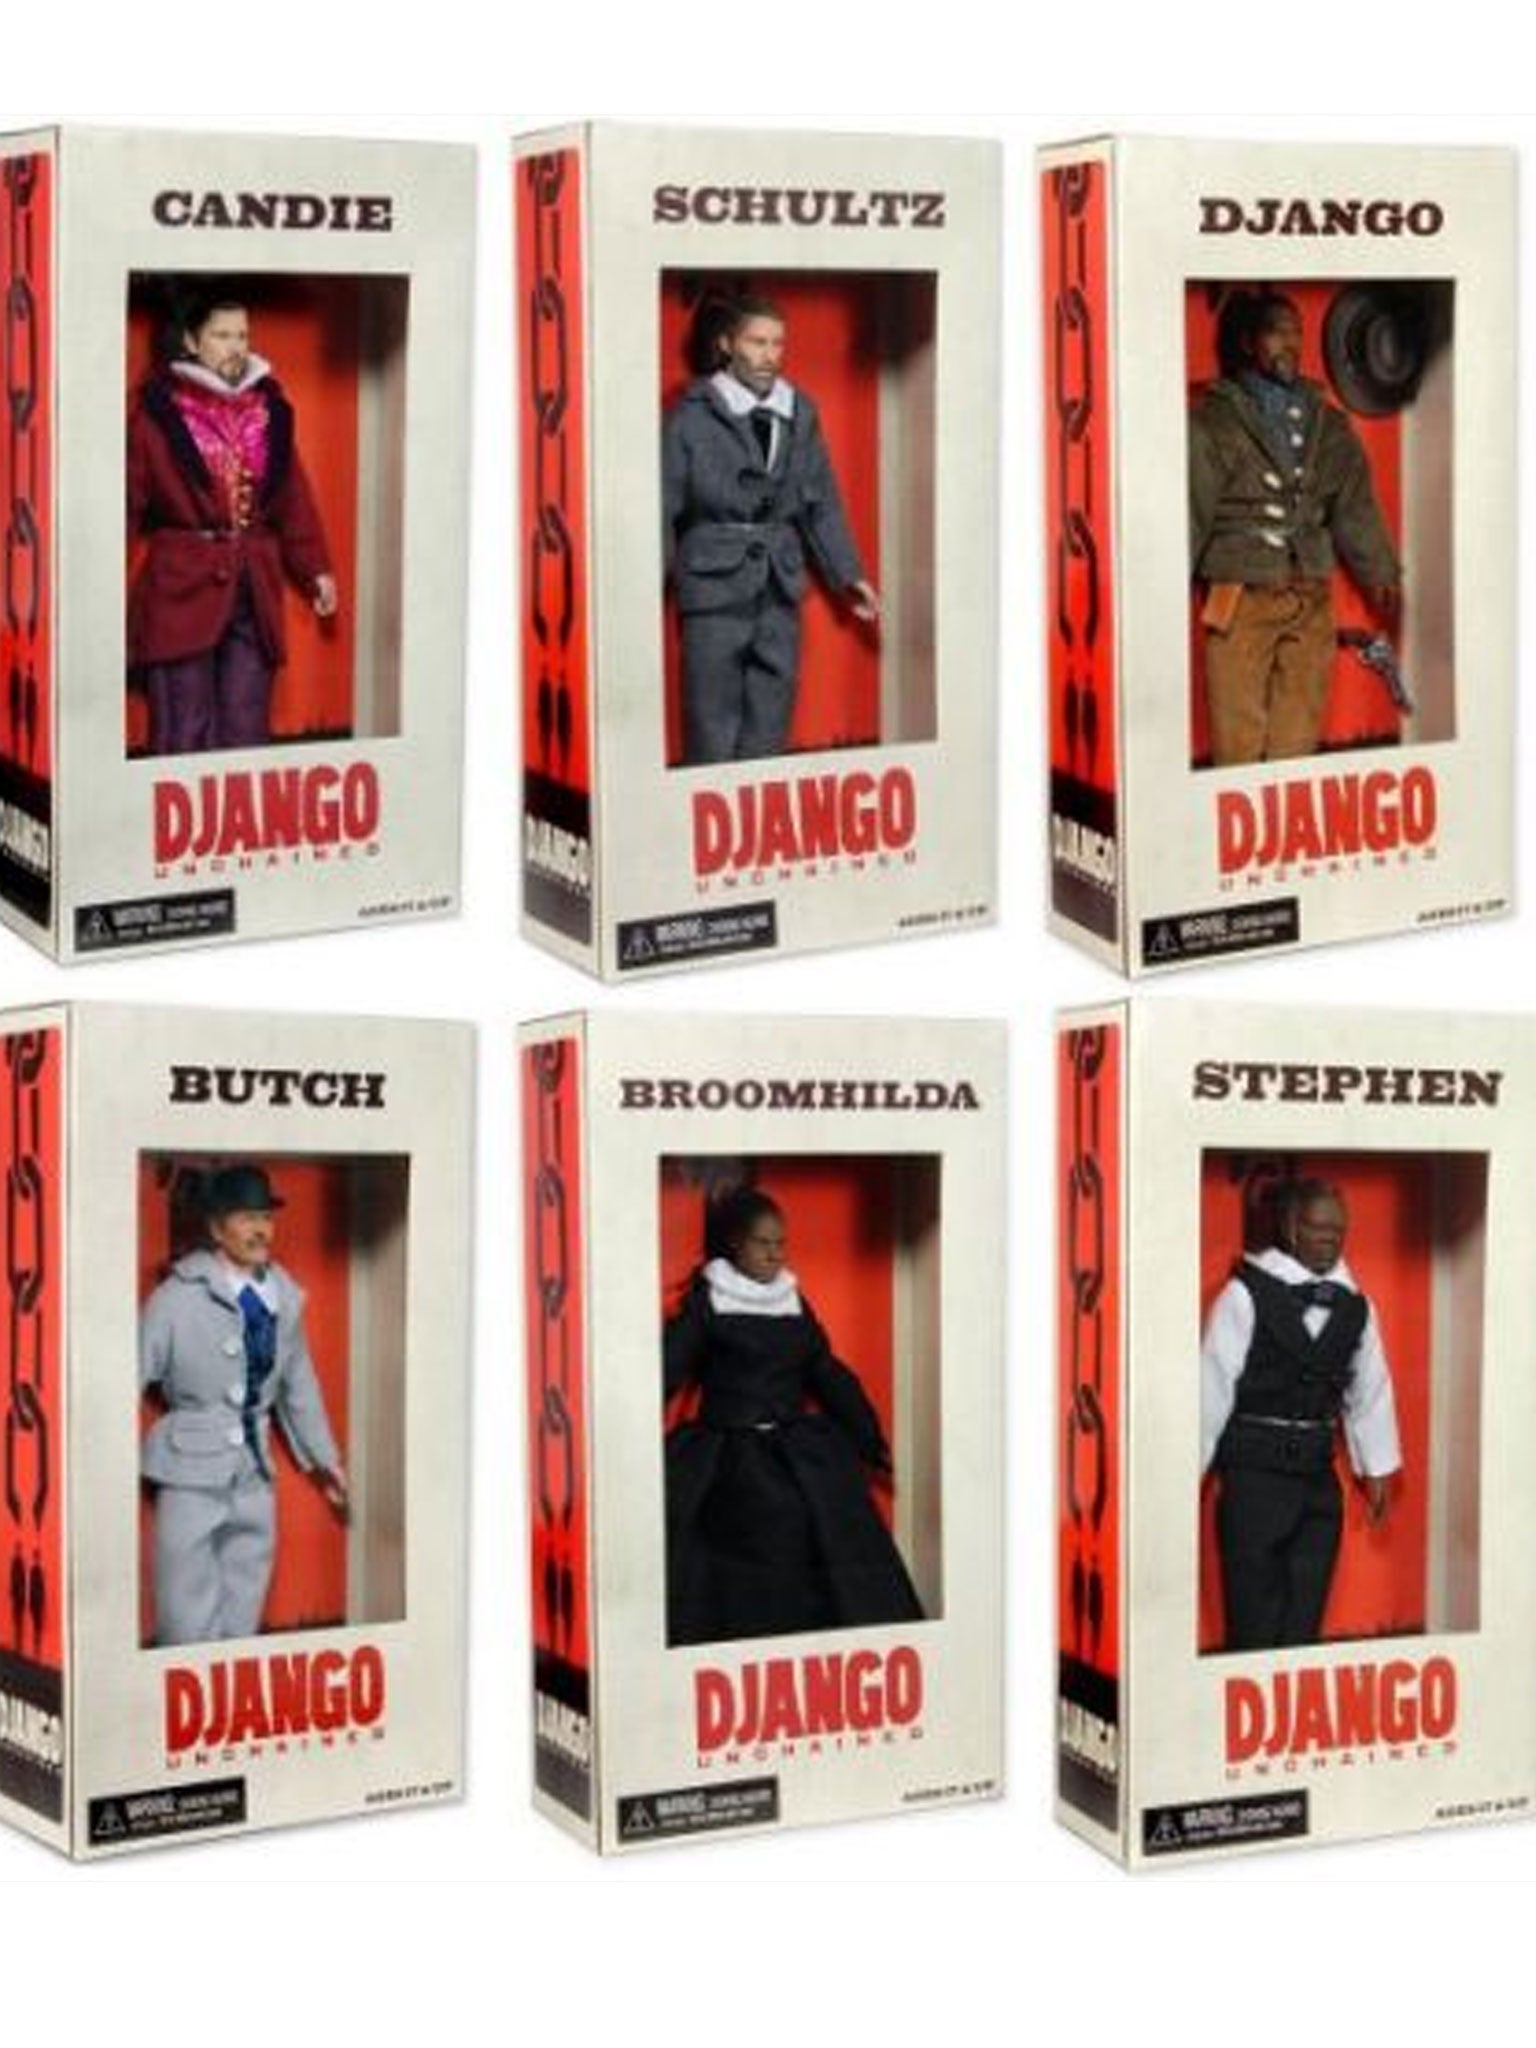 Dolls from Quentin Tarantino's latest film, Django Unchained